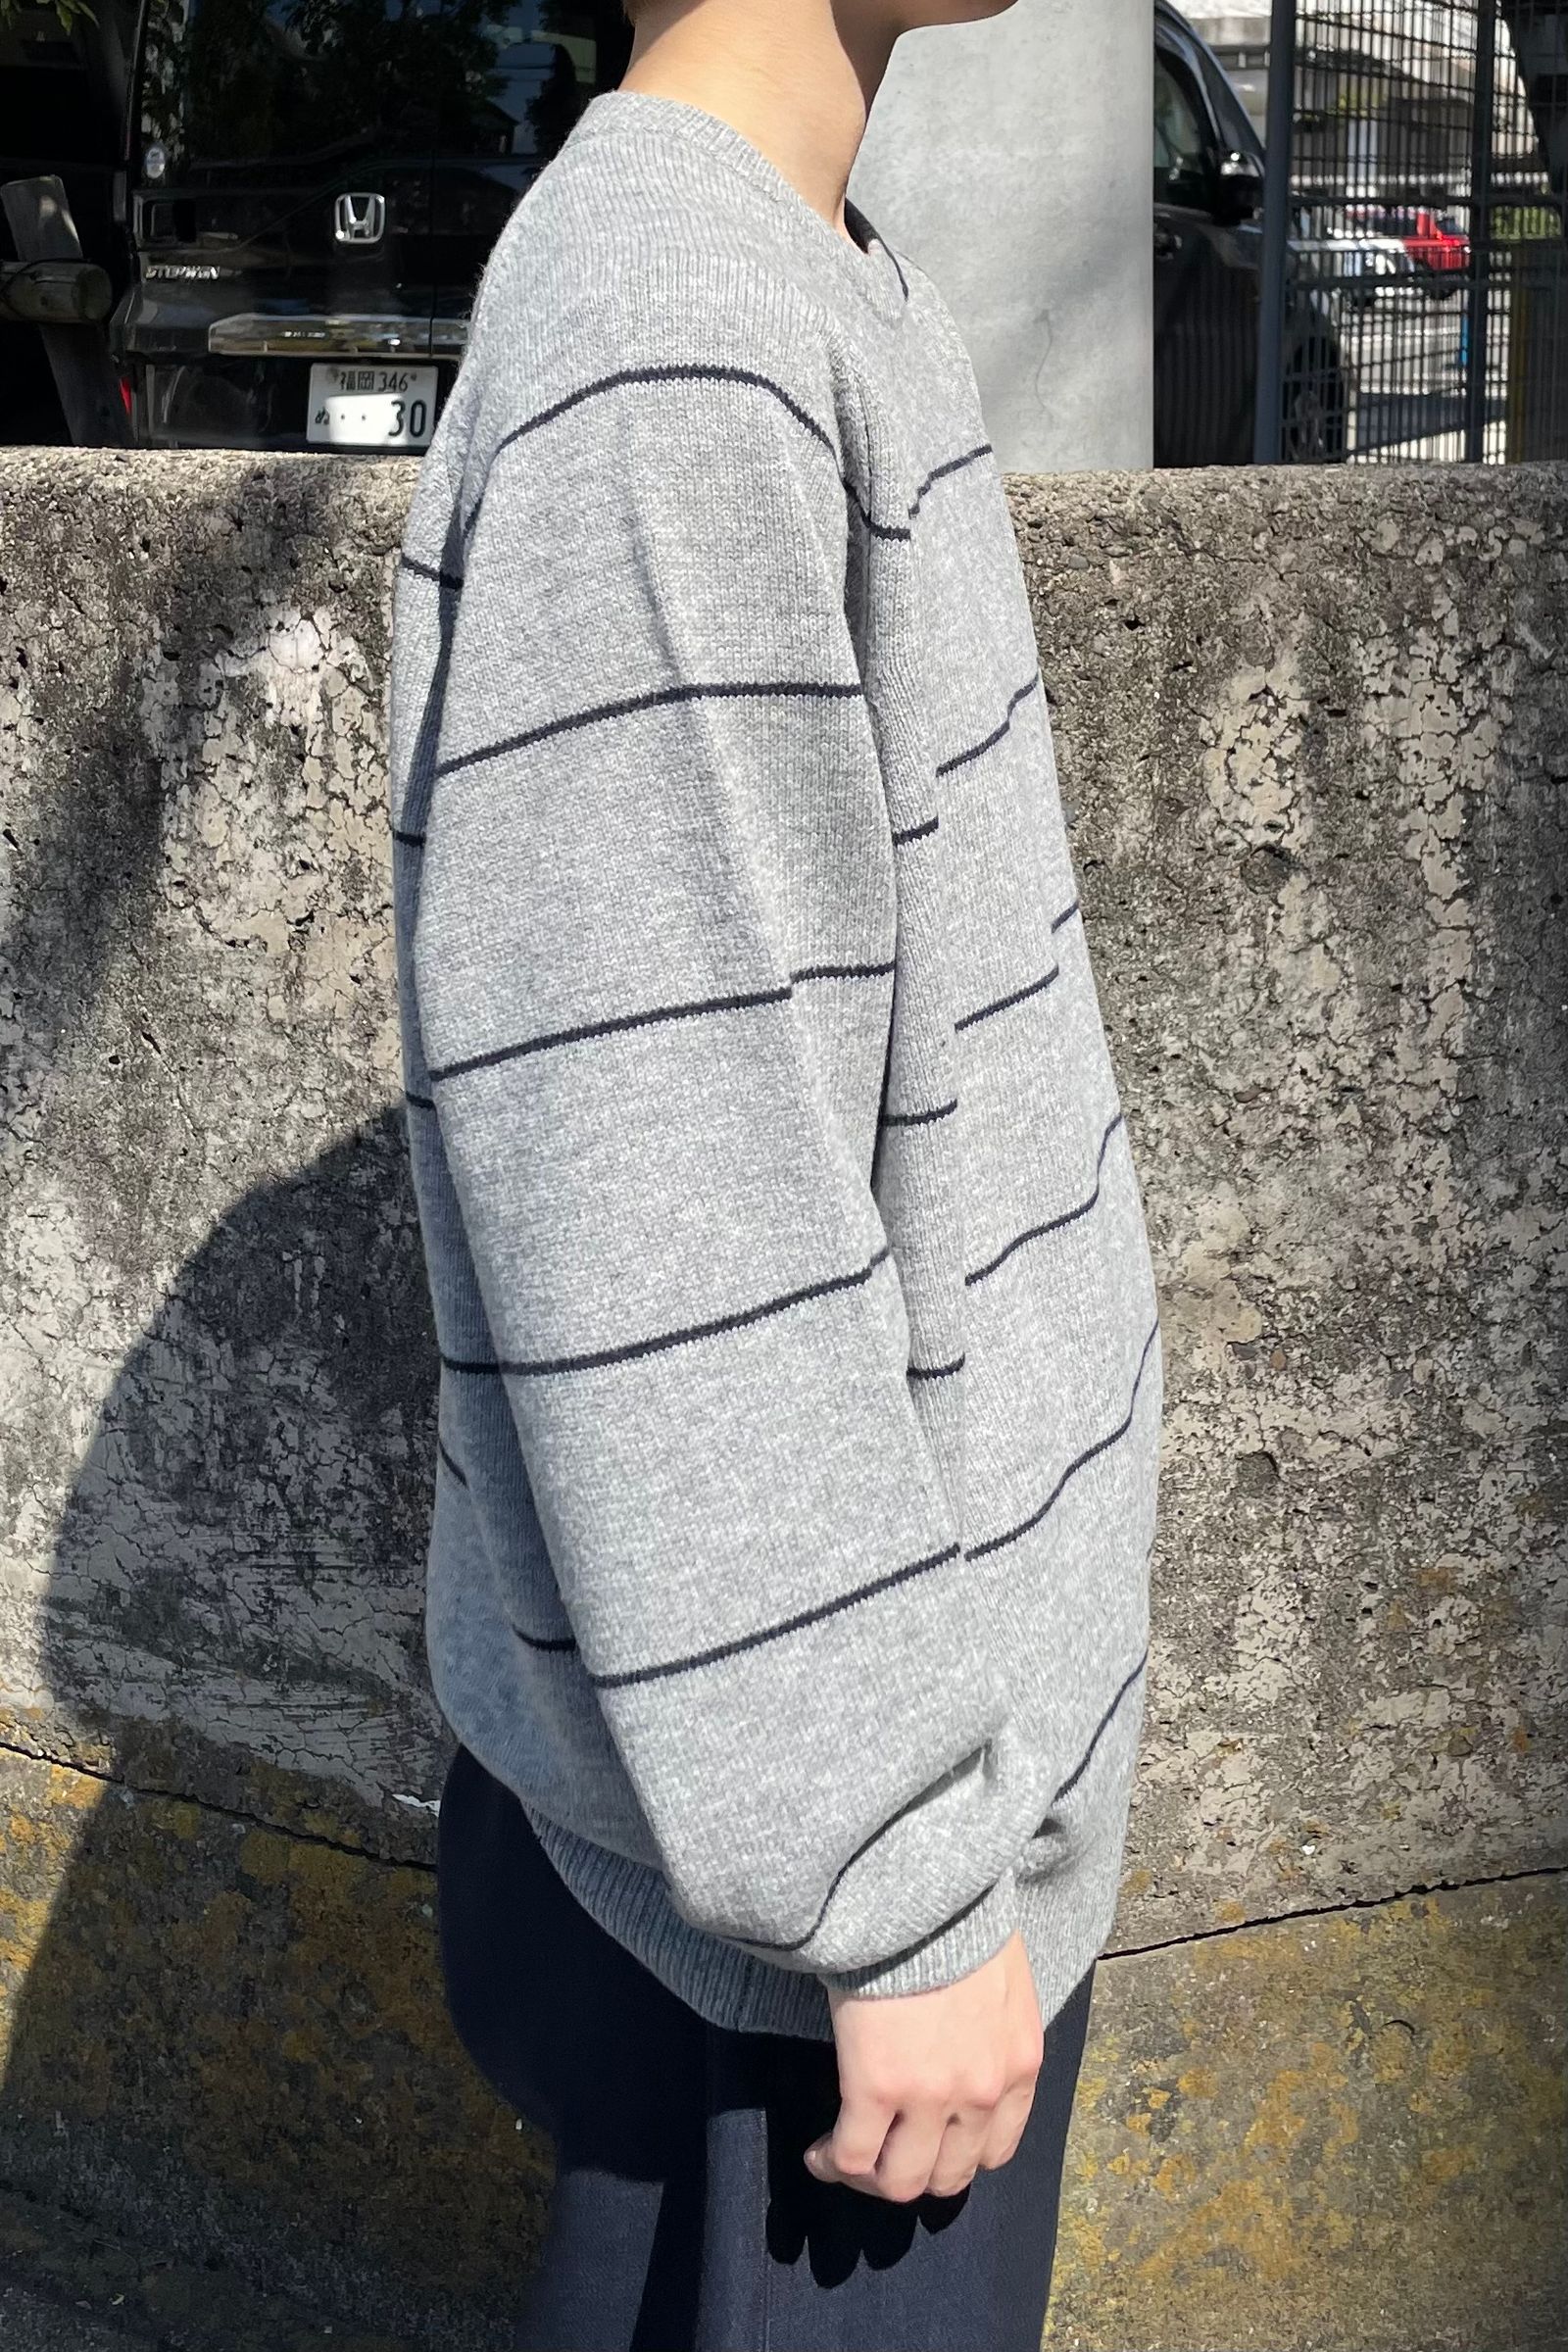 UNIVERSAL PRODUCTS - merino wool border crew neck knit -grey- 22aw 